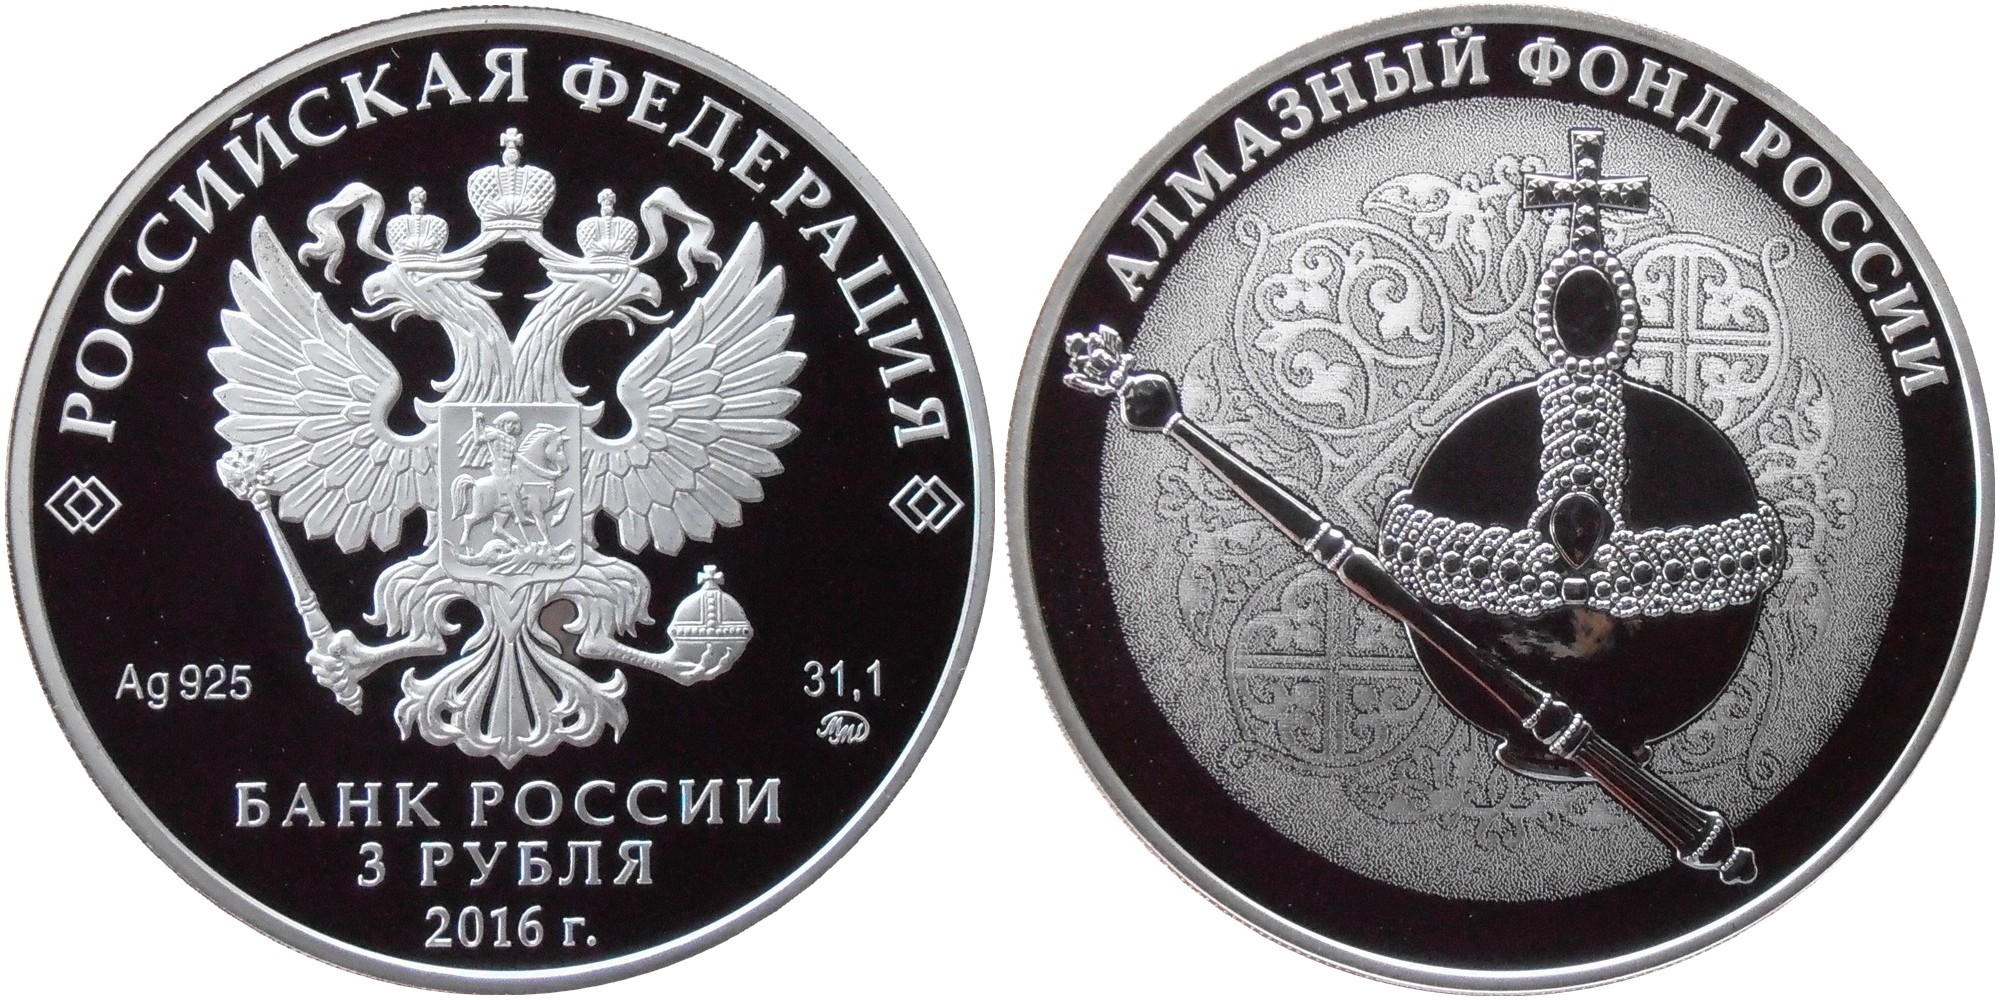 RUSSIE 3 ROUBLES 2016 - DIAMANTS DE RUSSIE : SCEPTRE IMPERIAL